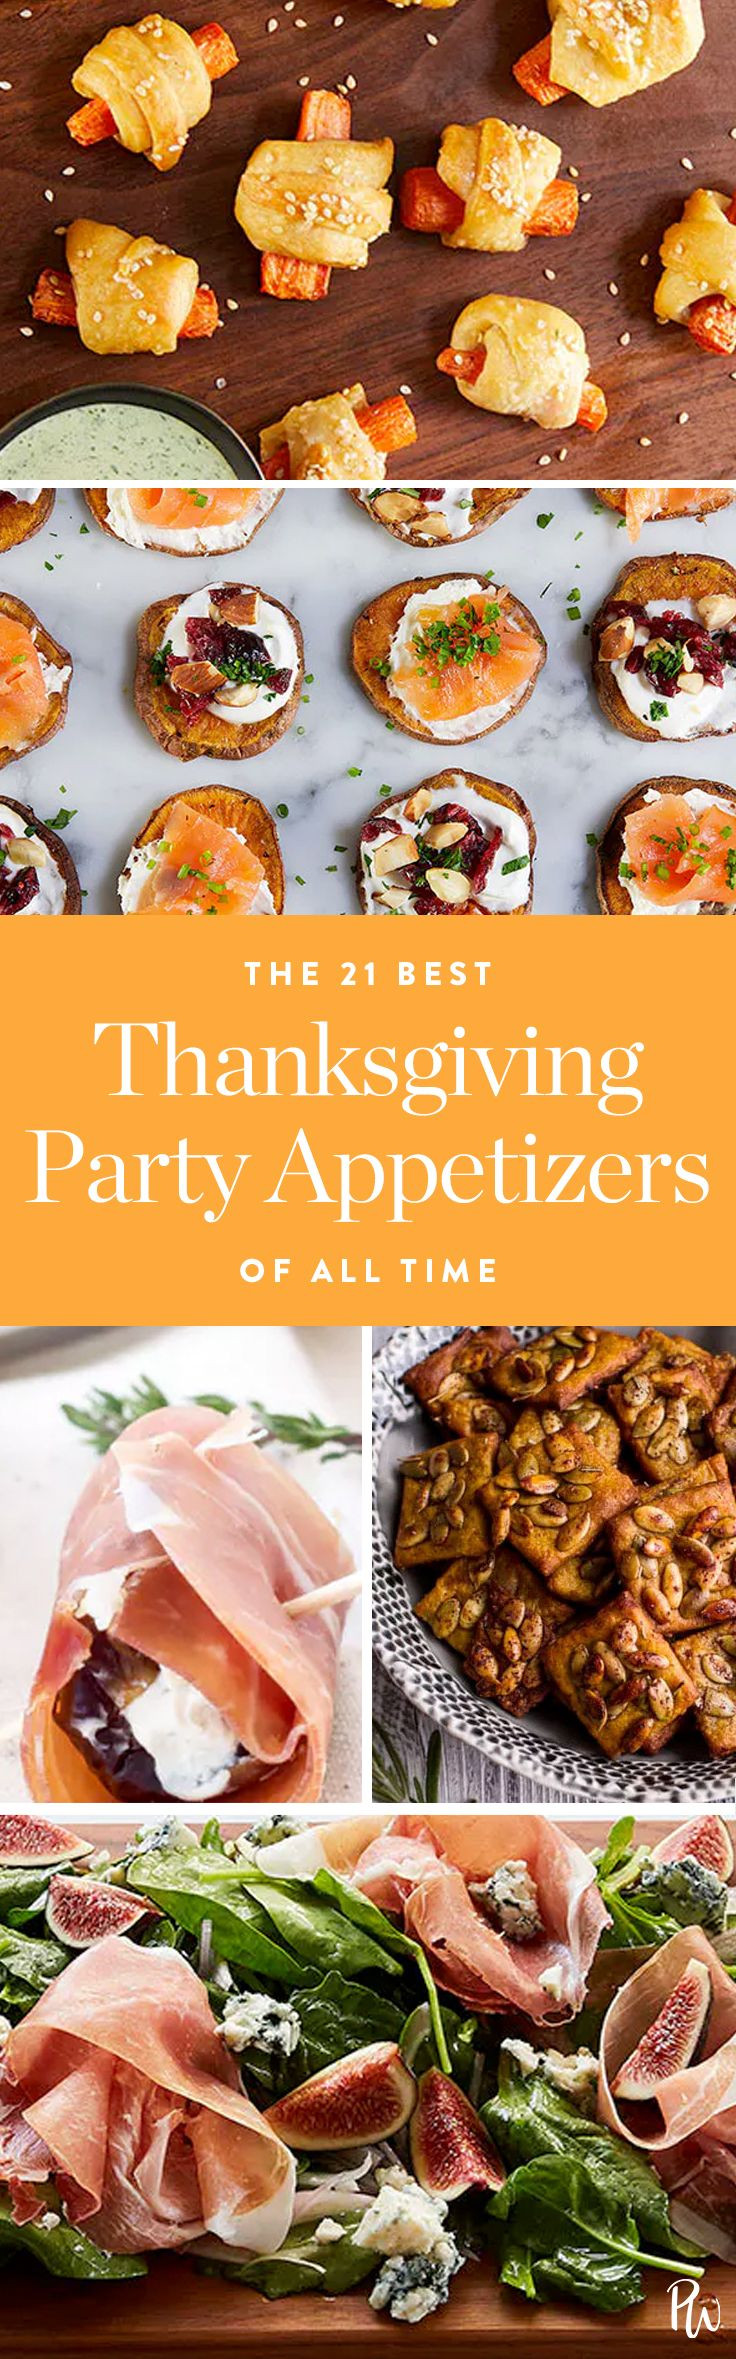 Best Thanksgiving Appetizers
 Best 25 Thanksgiving appetizers ideas on Pinterest